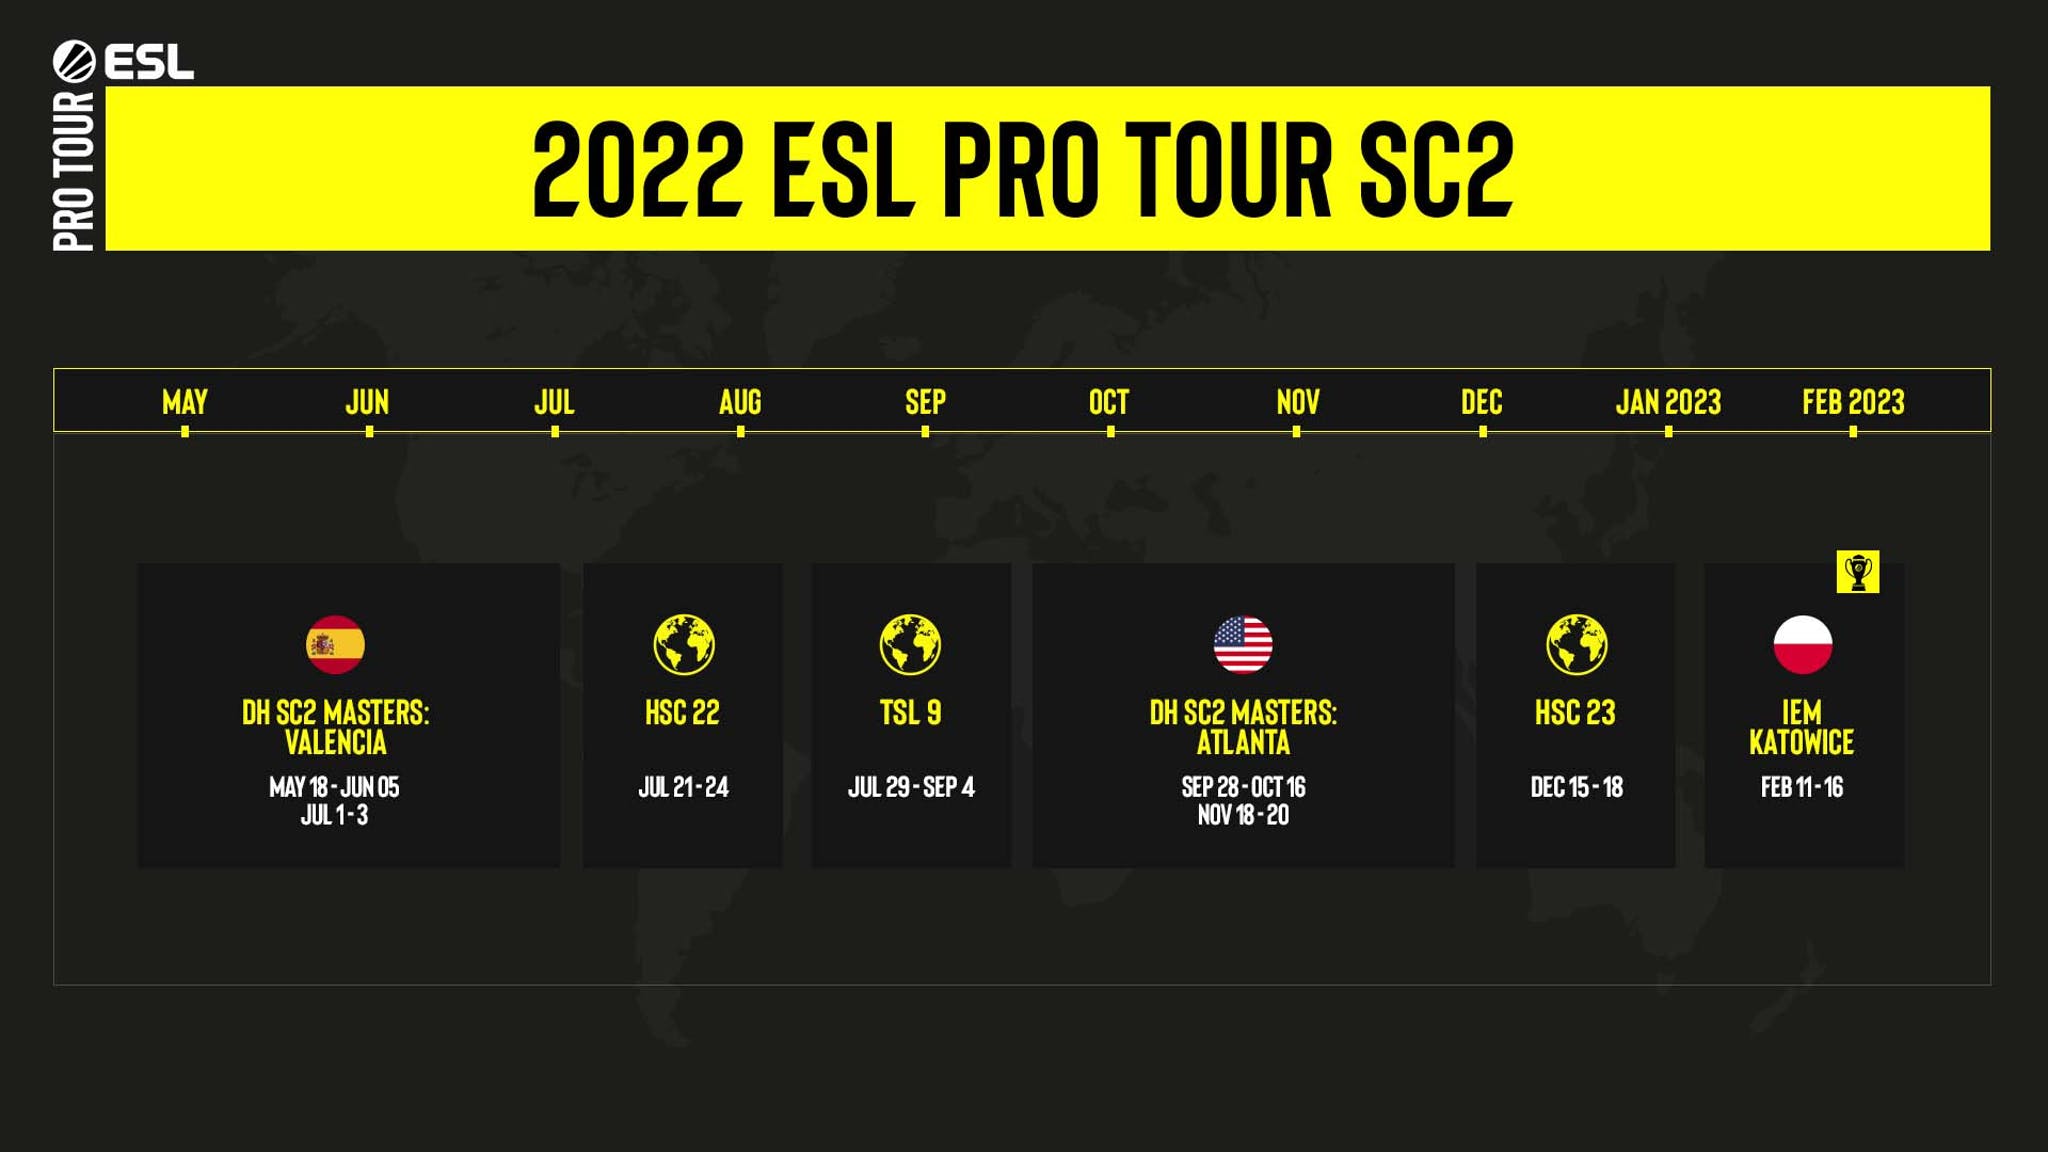 StarCraft 2 ESL Pro Tour harmonogram